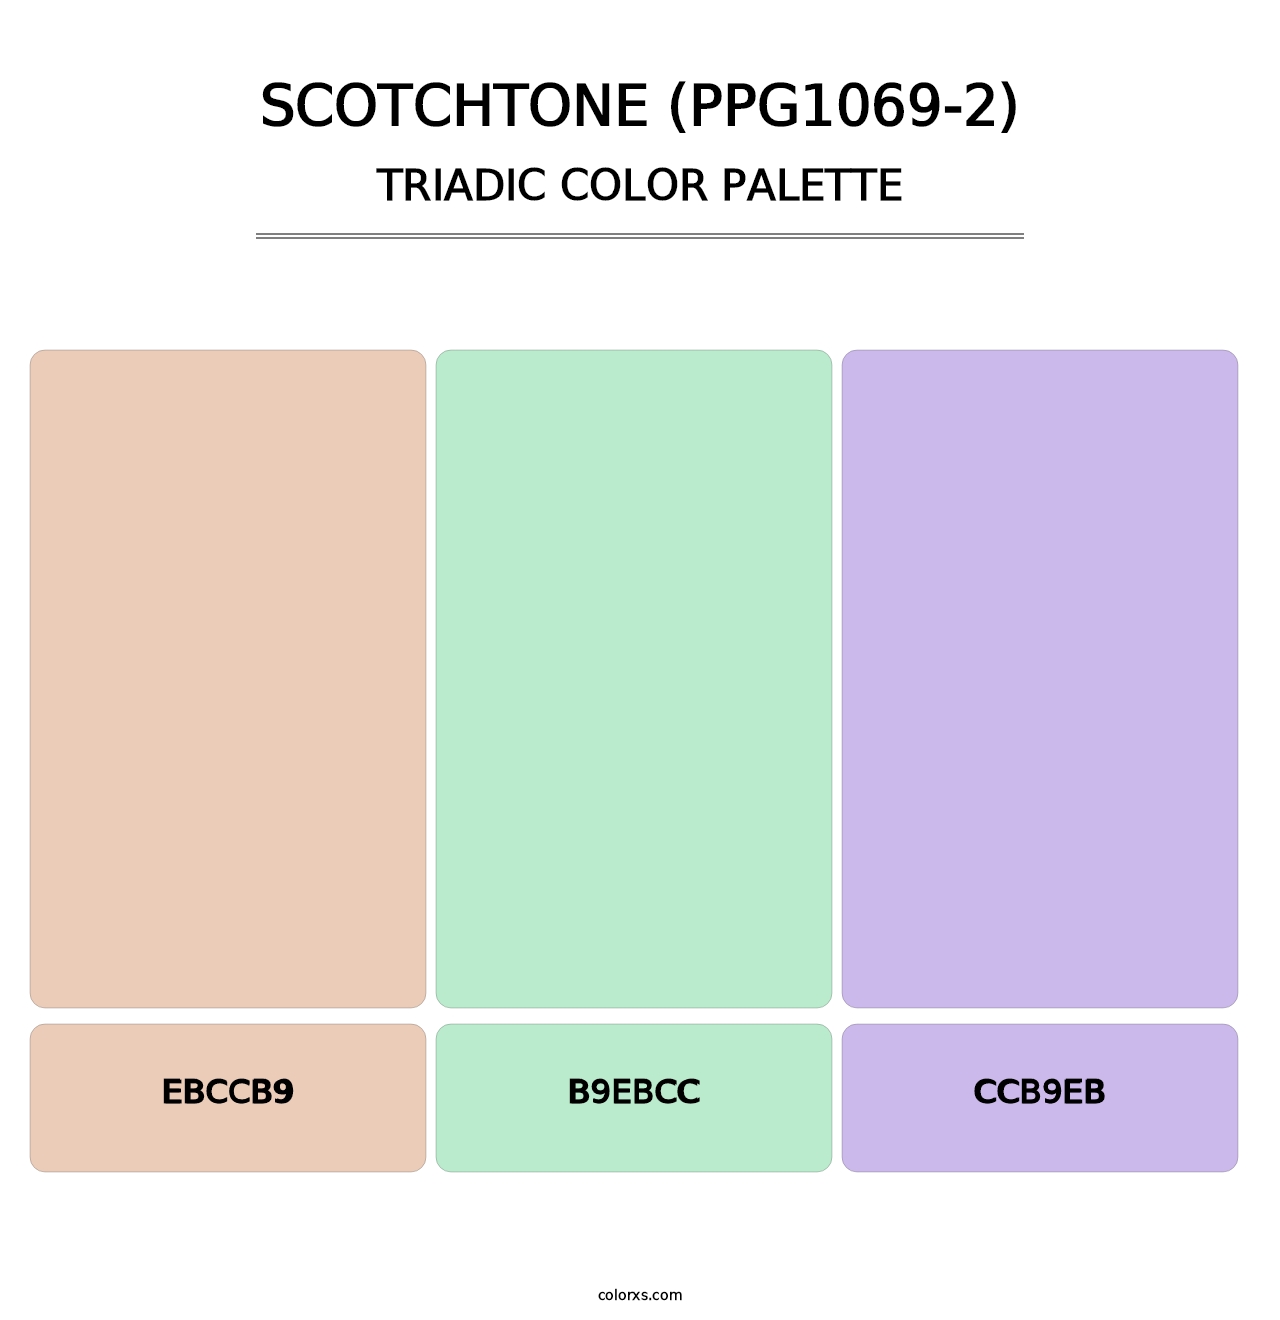 Scotchtone (PPG1069-2) - Triadic Color Palette